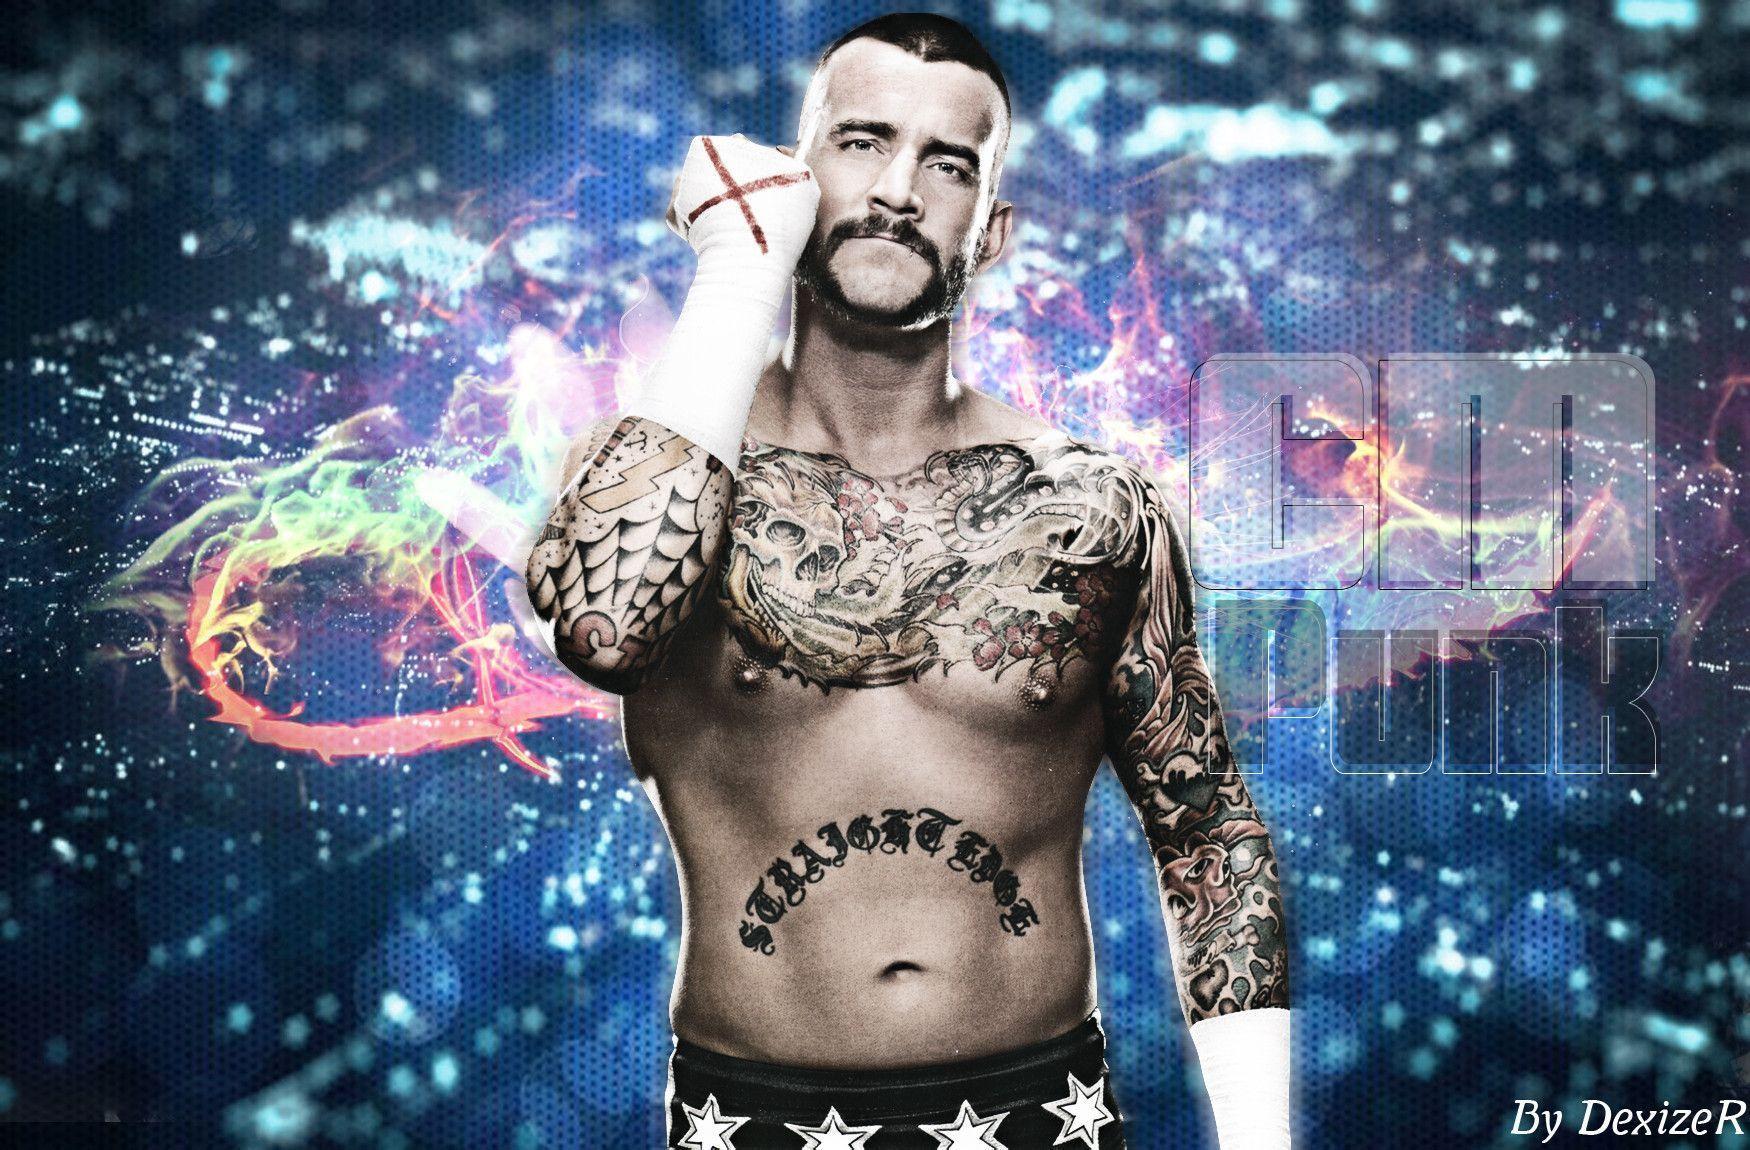 New WWE CM Punk 2014 HD Wallpaper